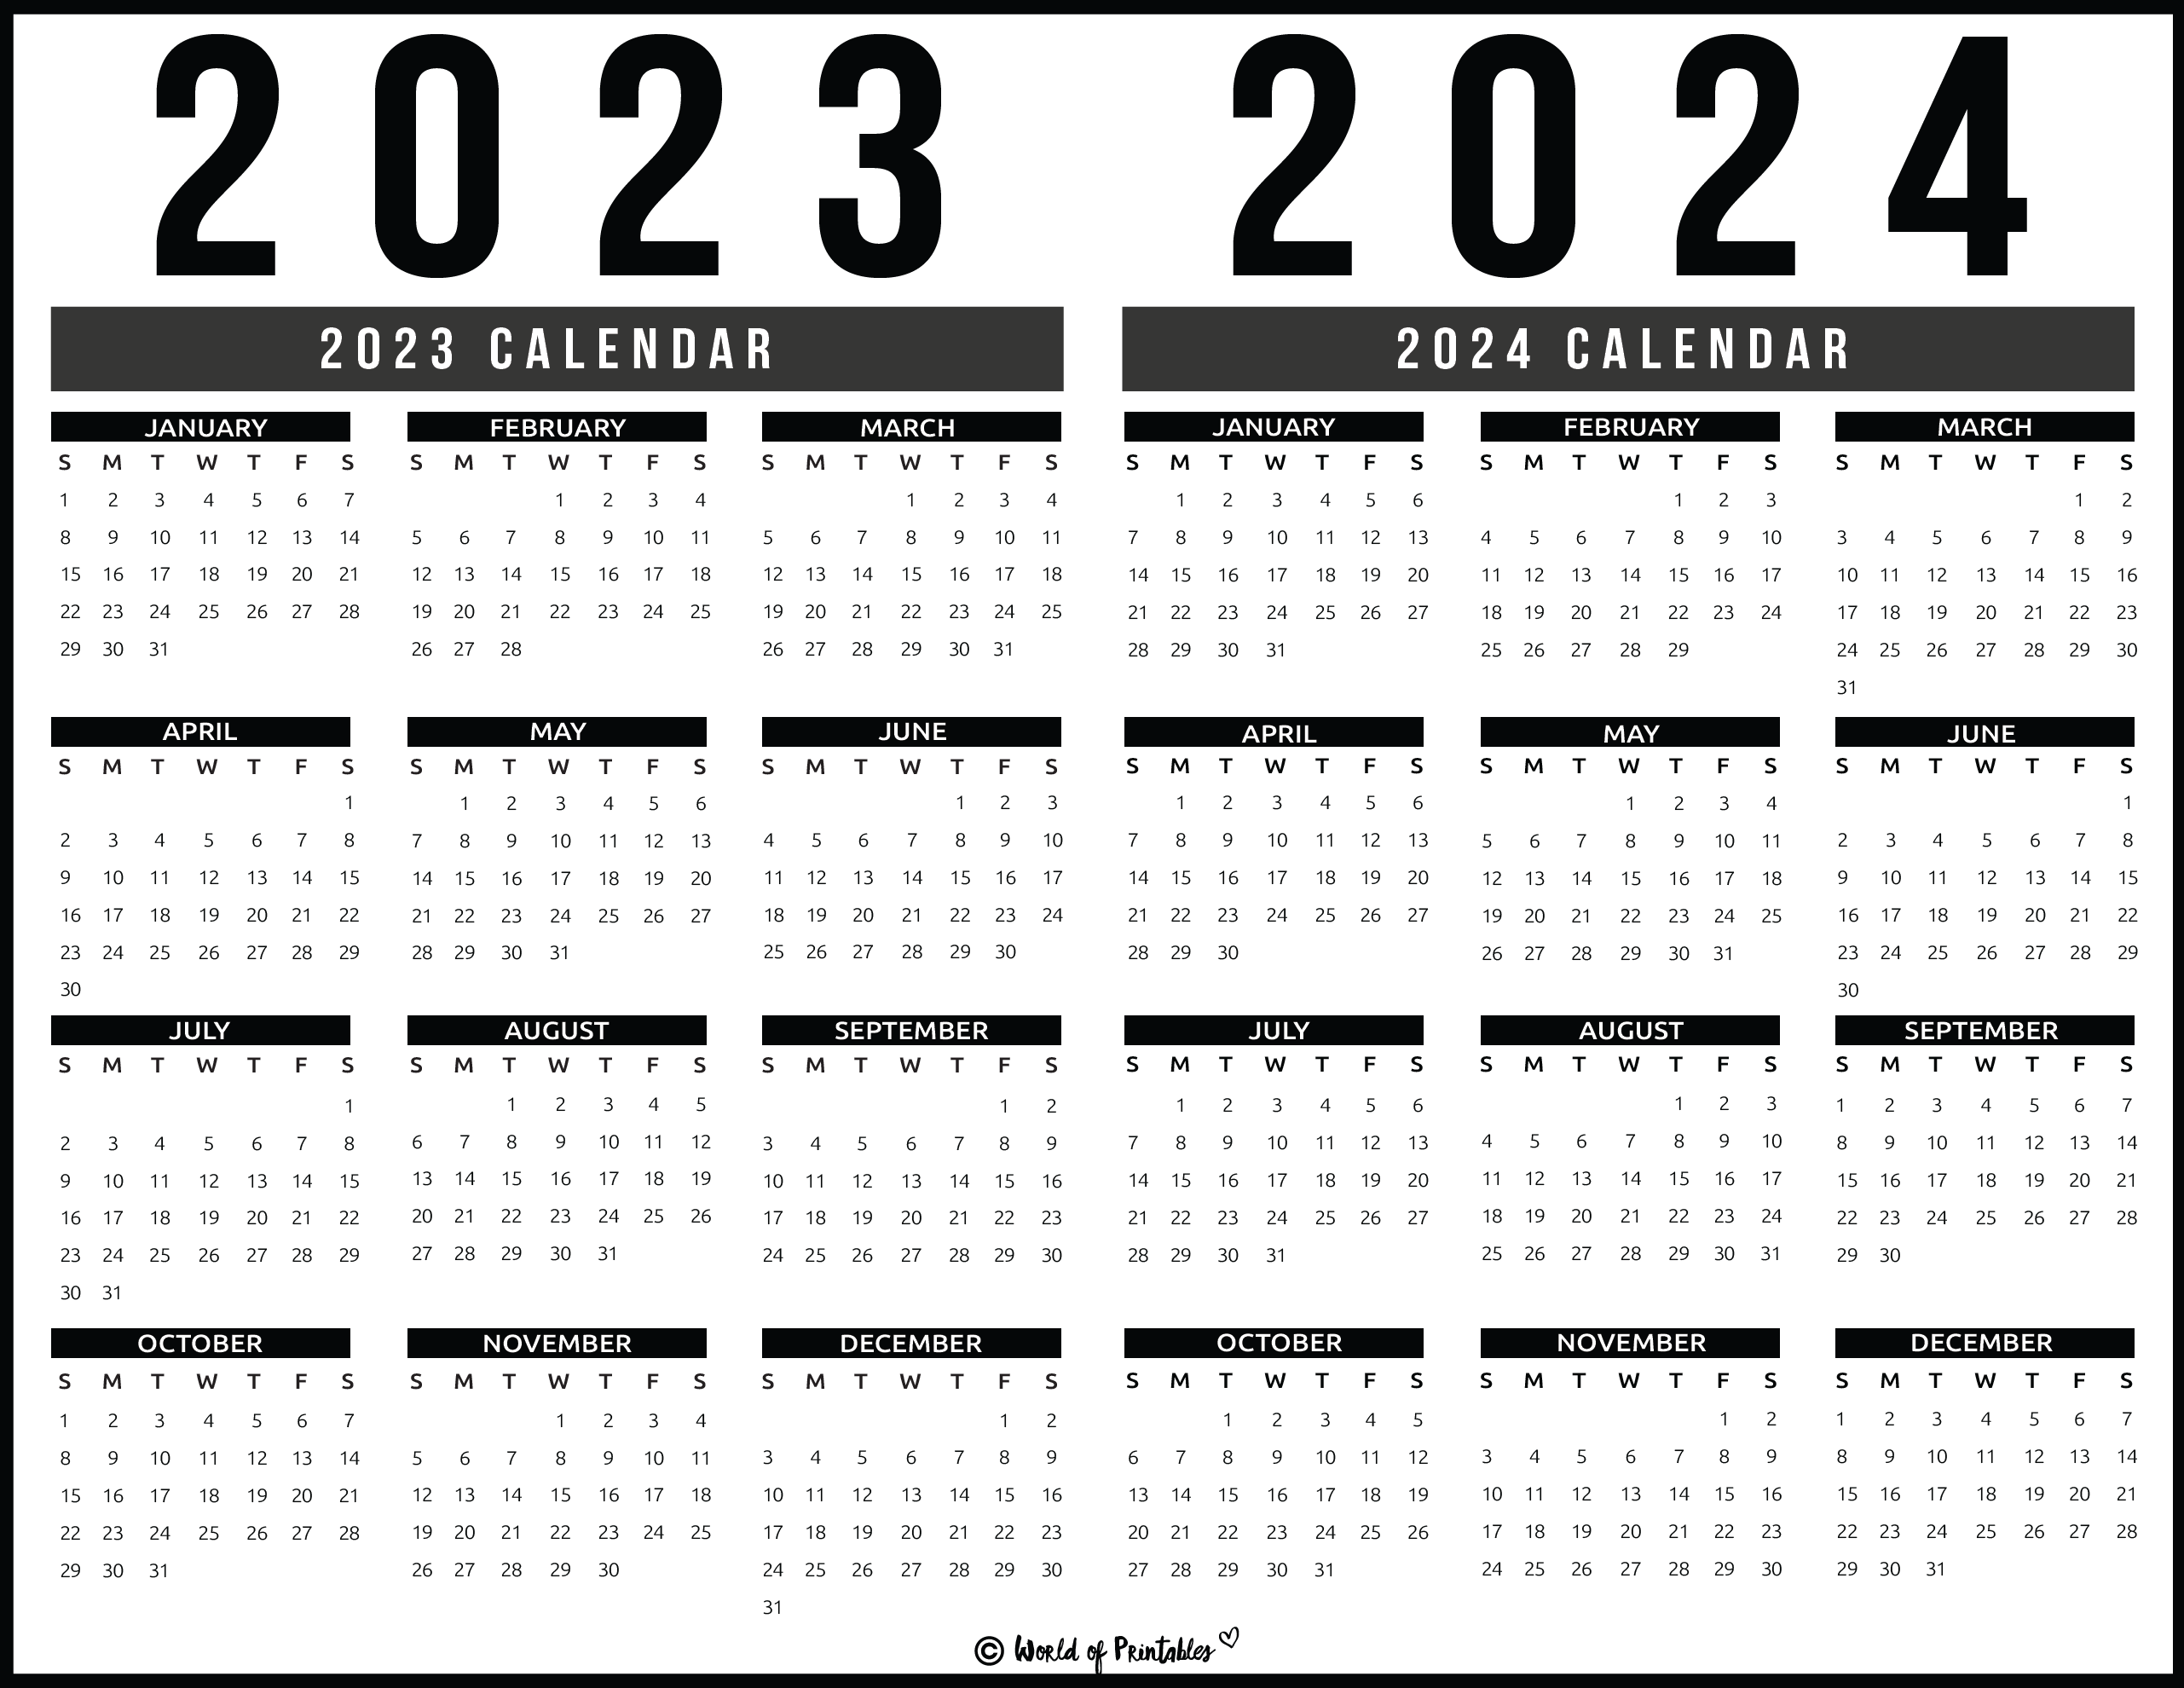 2023 2024 Calendar Free Printables - World Of Printables for Printable Calendar 2023 And 2024 With Holidays